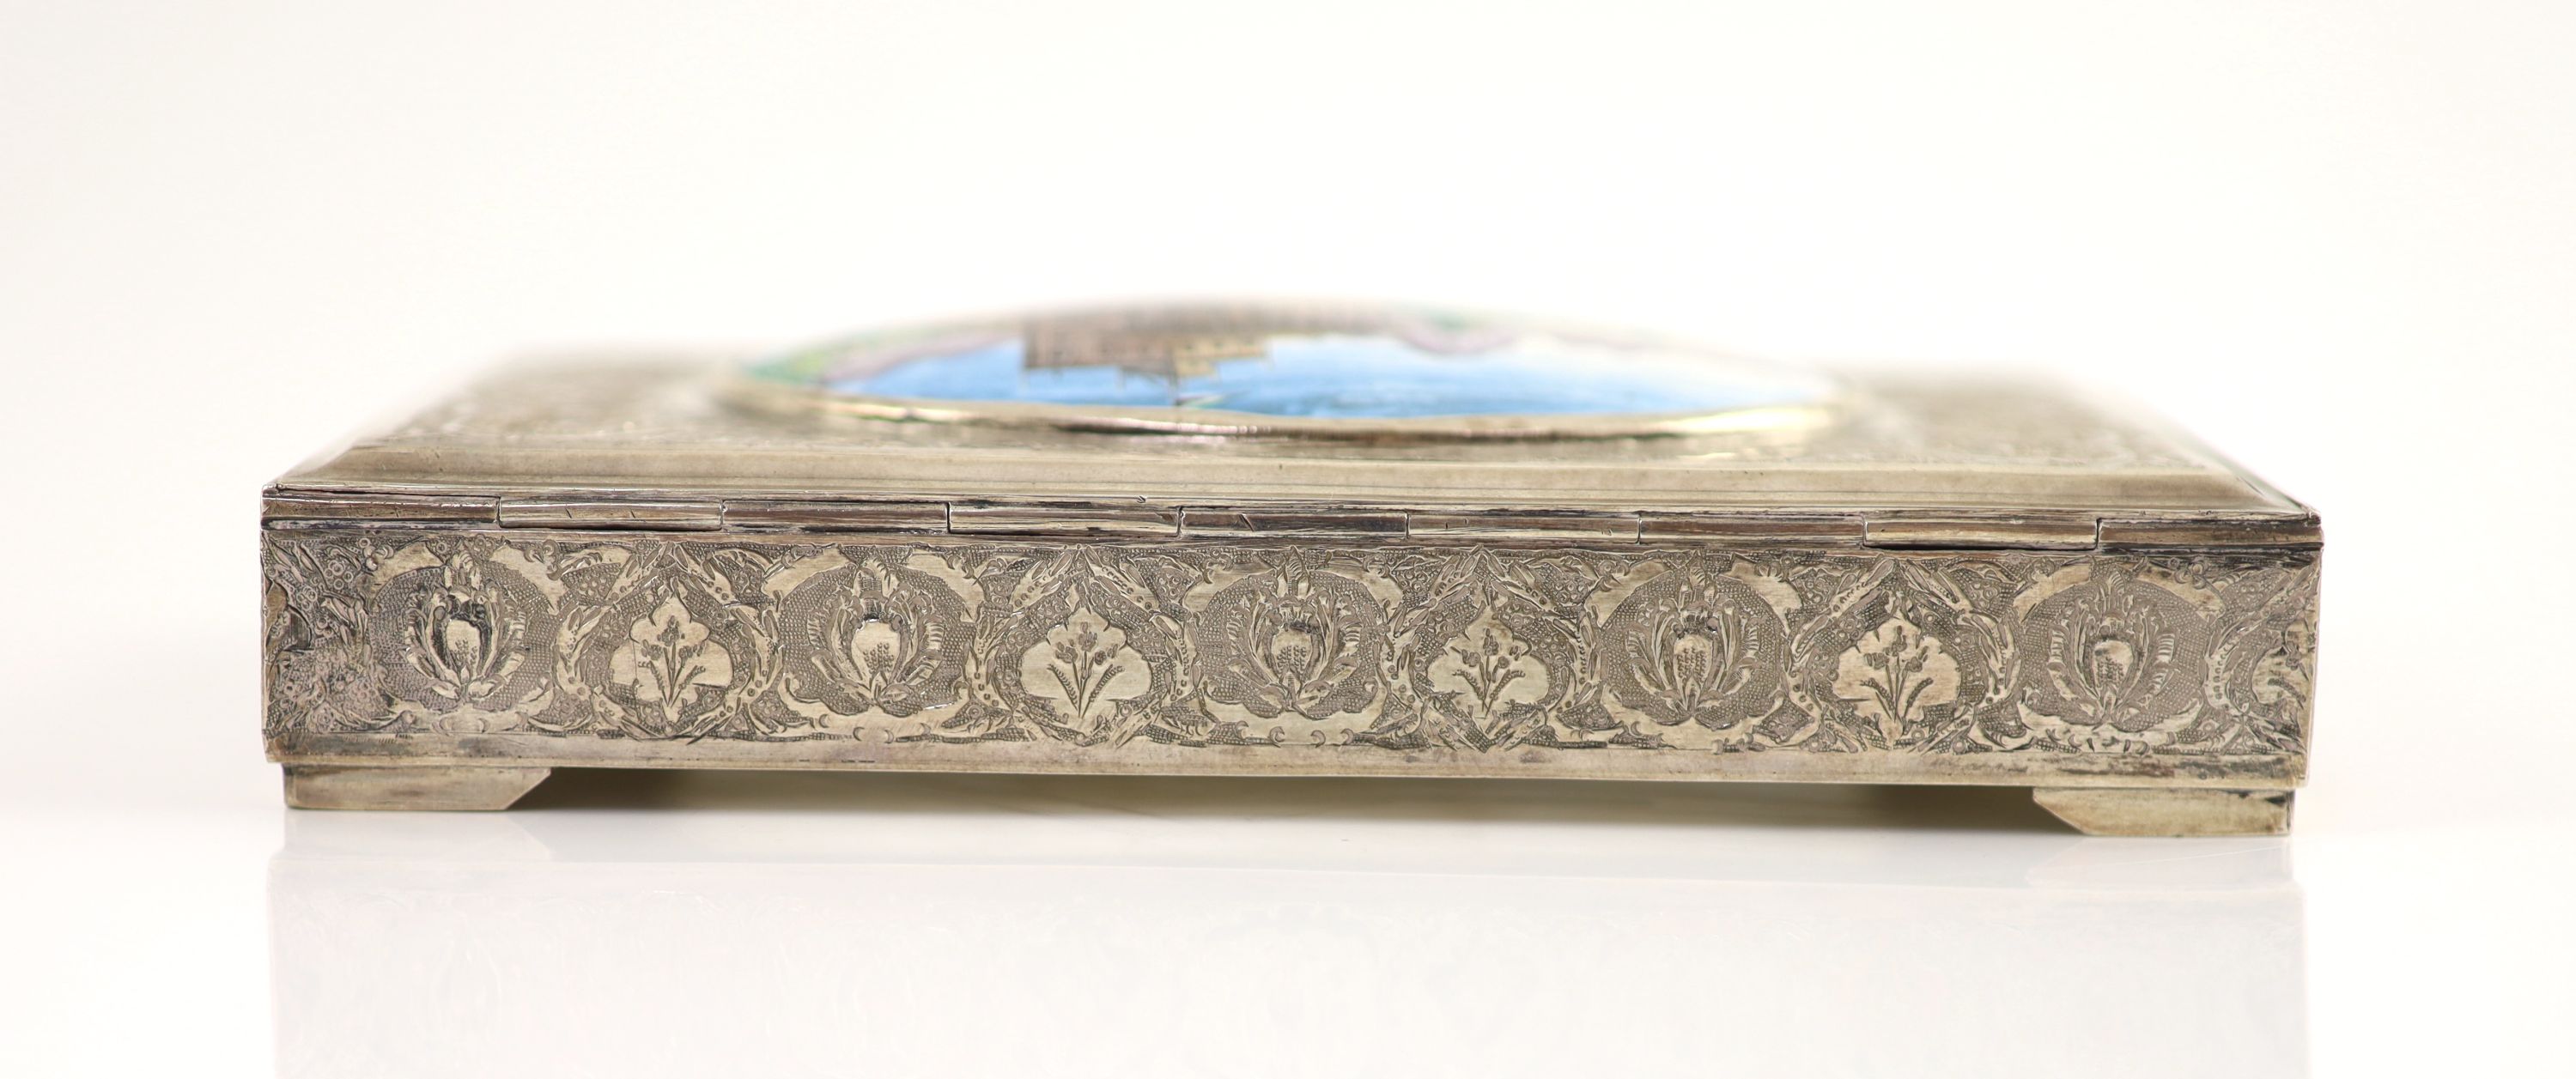 An early 20th century Persian rectangular silver box 14 x 8 x 2cm